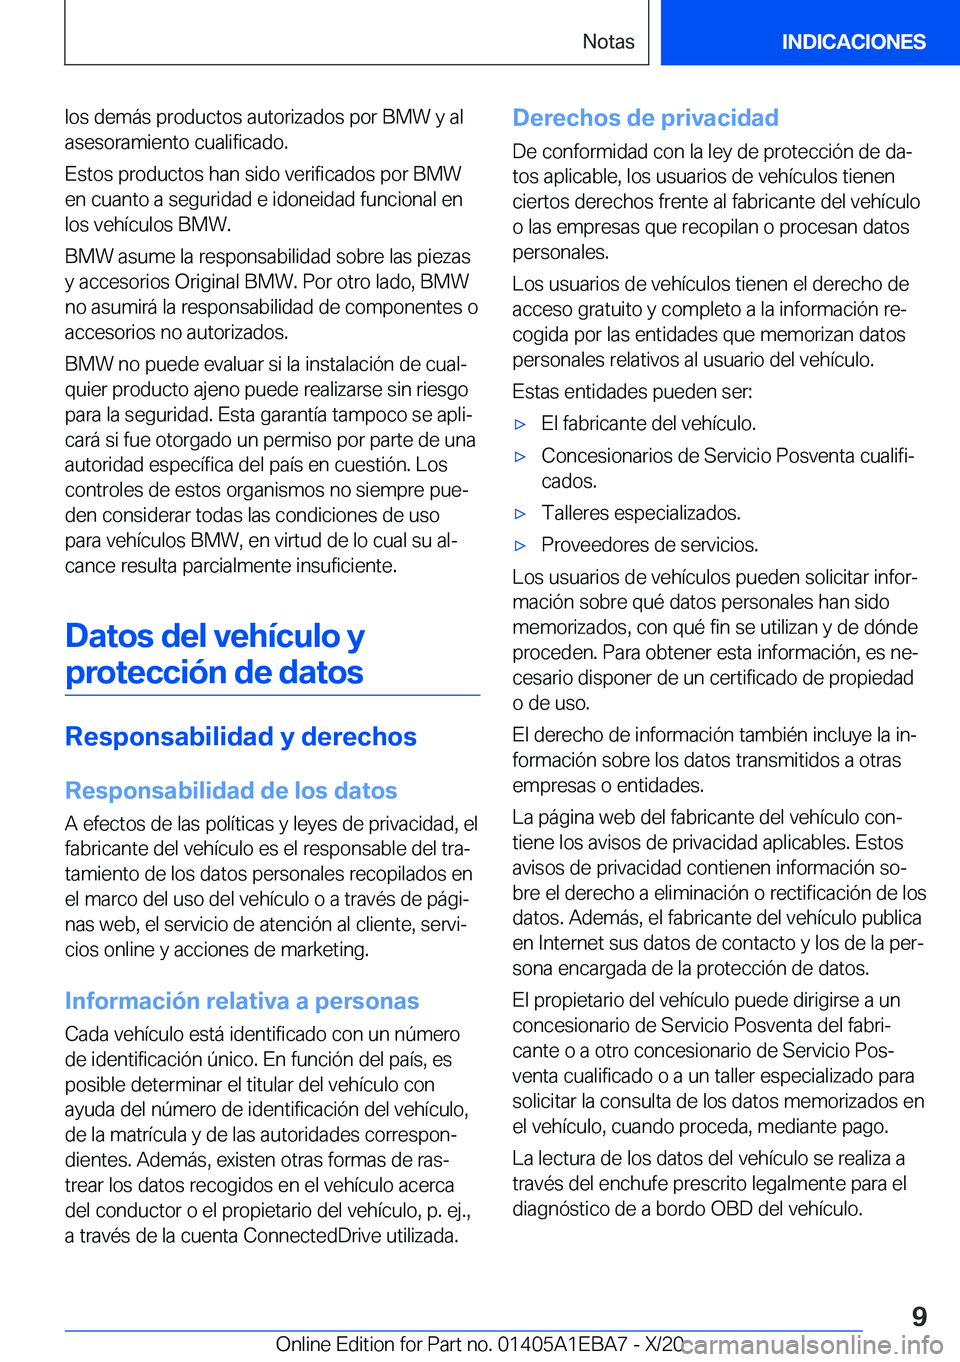 BMW 3 SERIES 2021  Manuales de Empleo (in Spanish) �l�o�s��d�e�m�